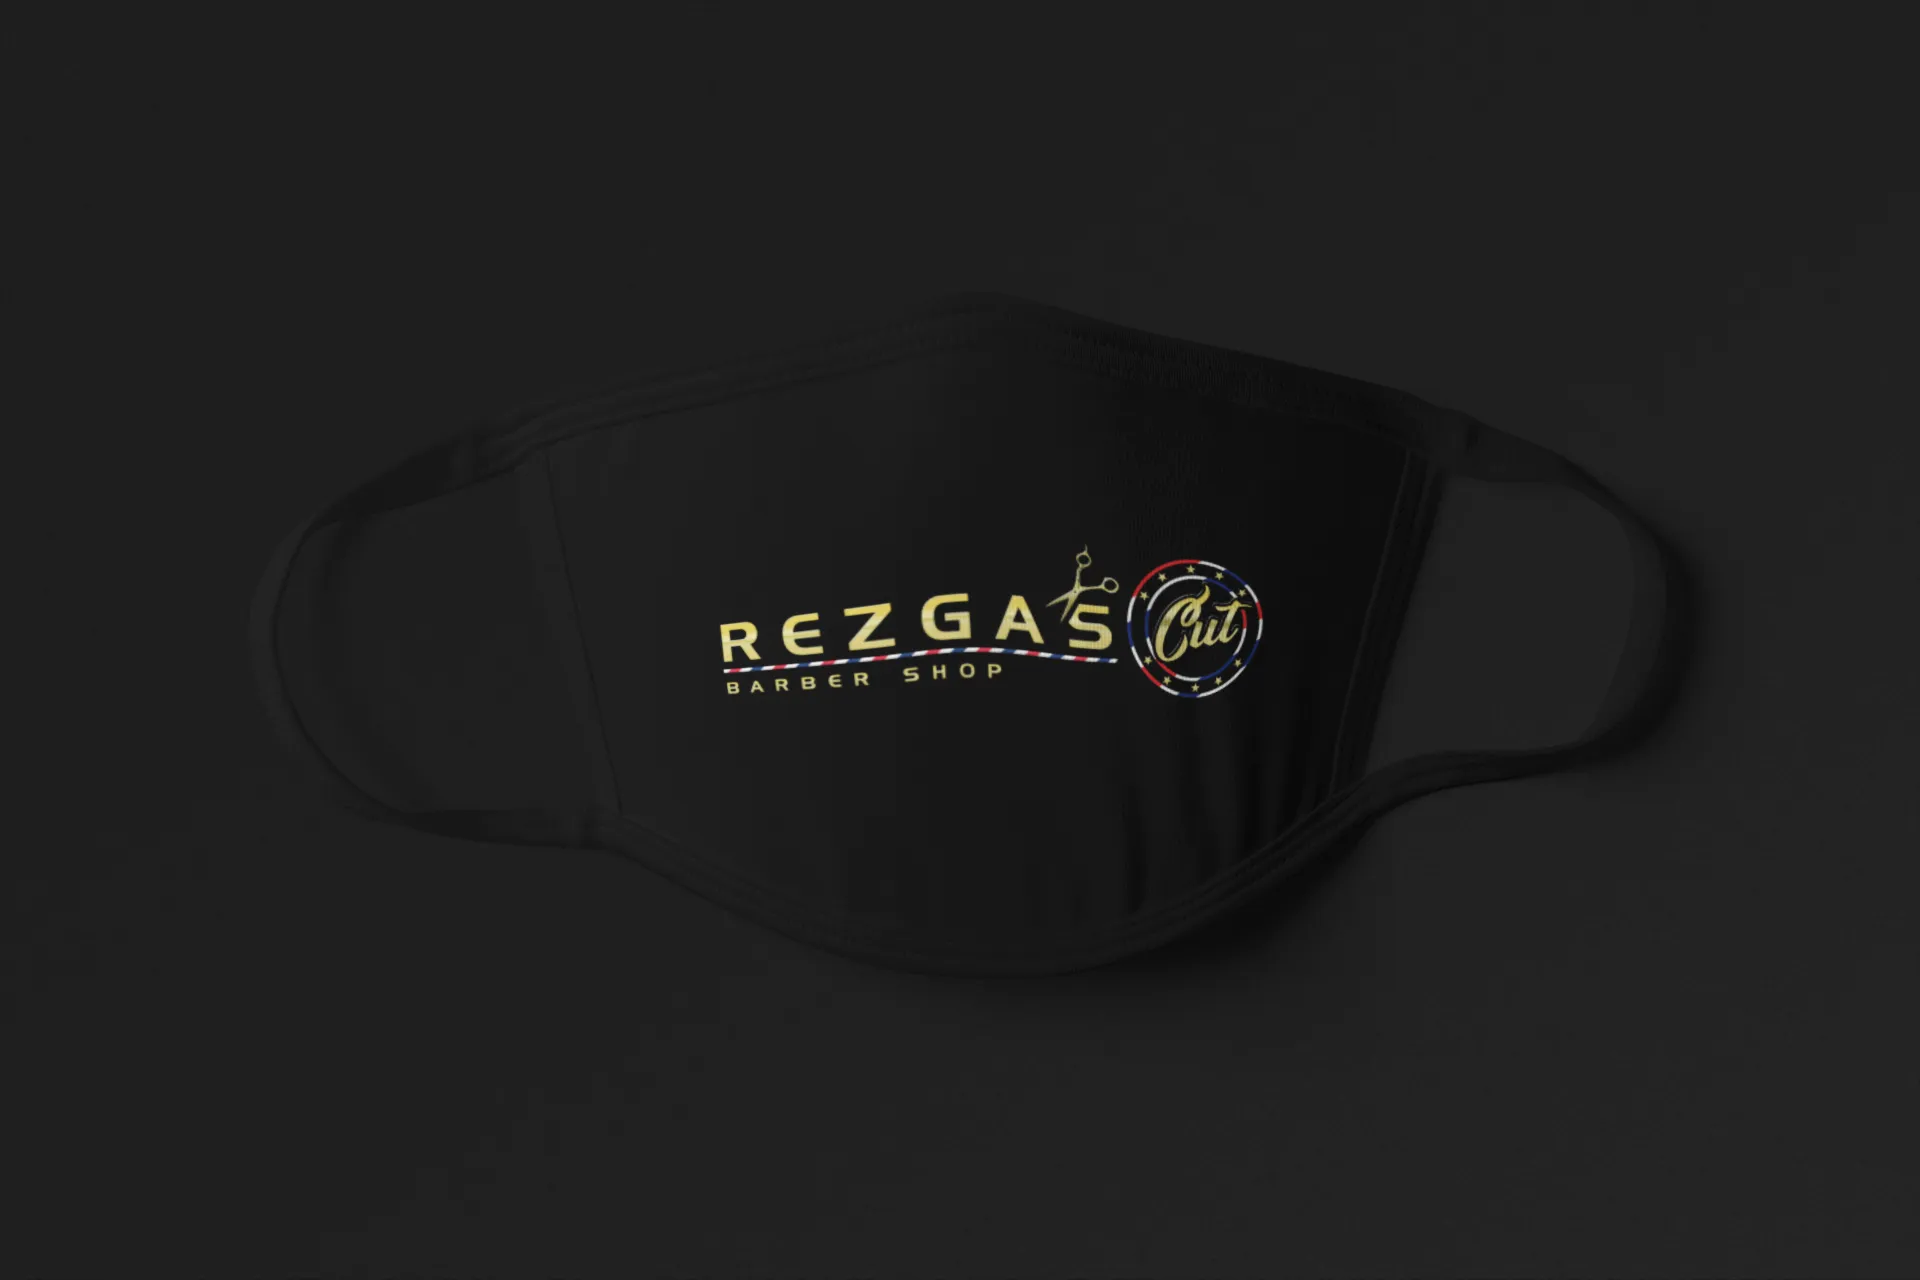 Rezga's Cut black face masks